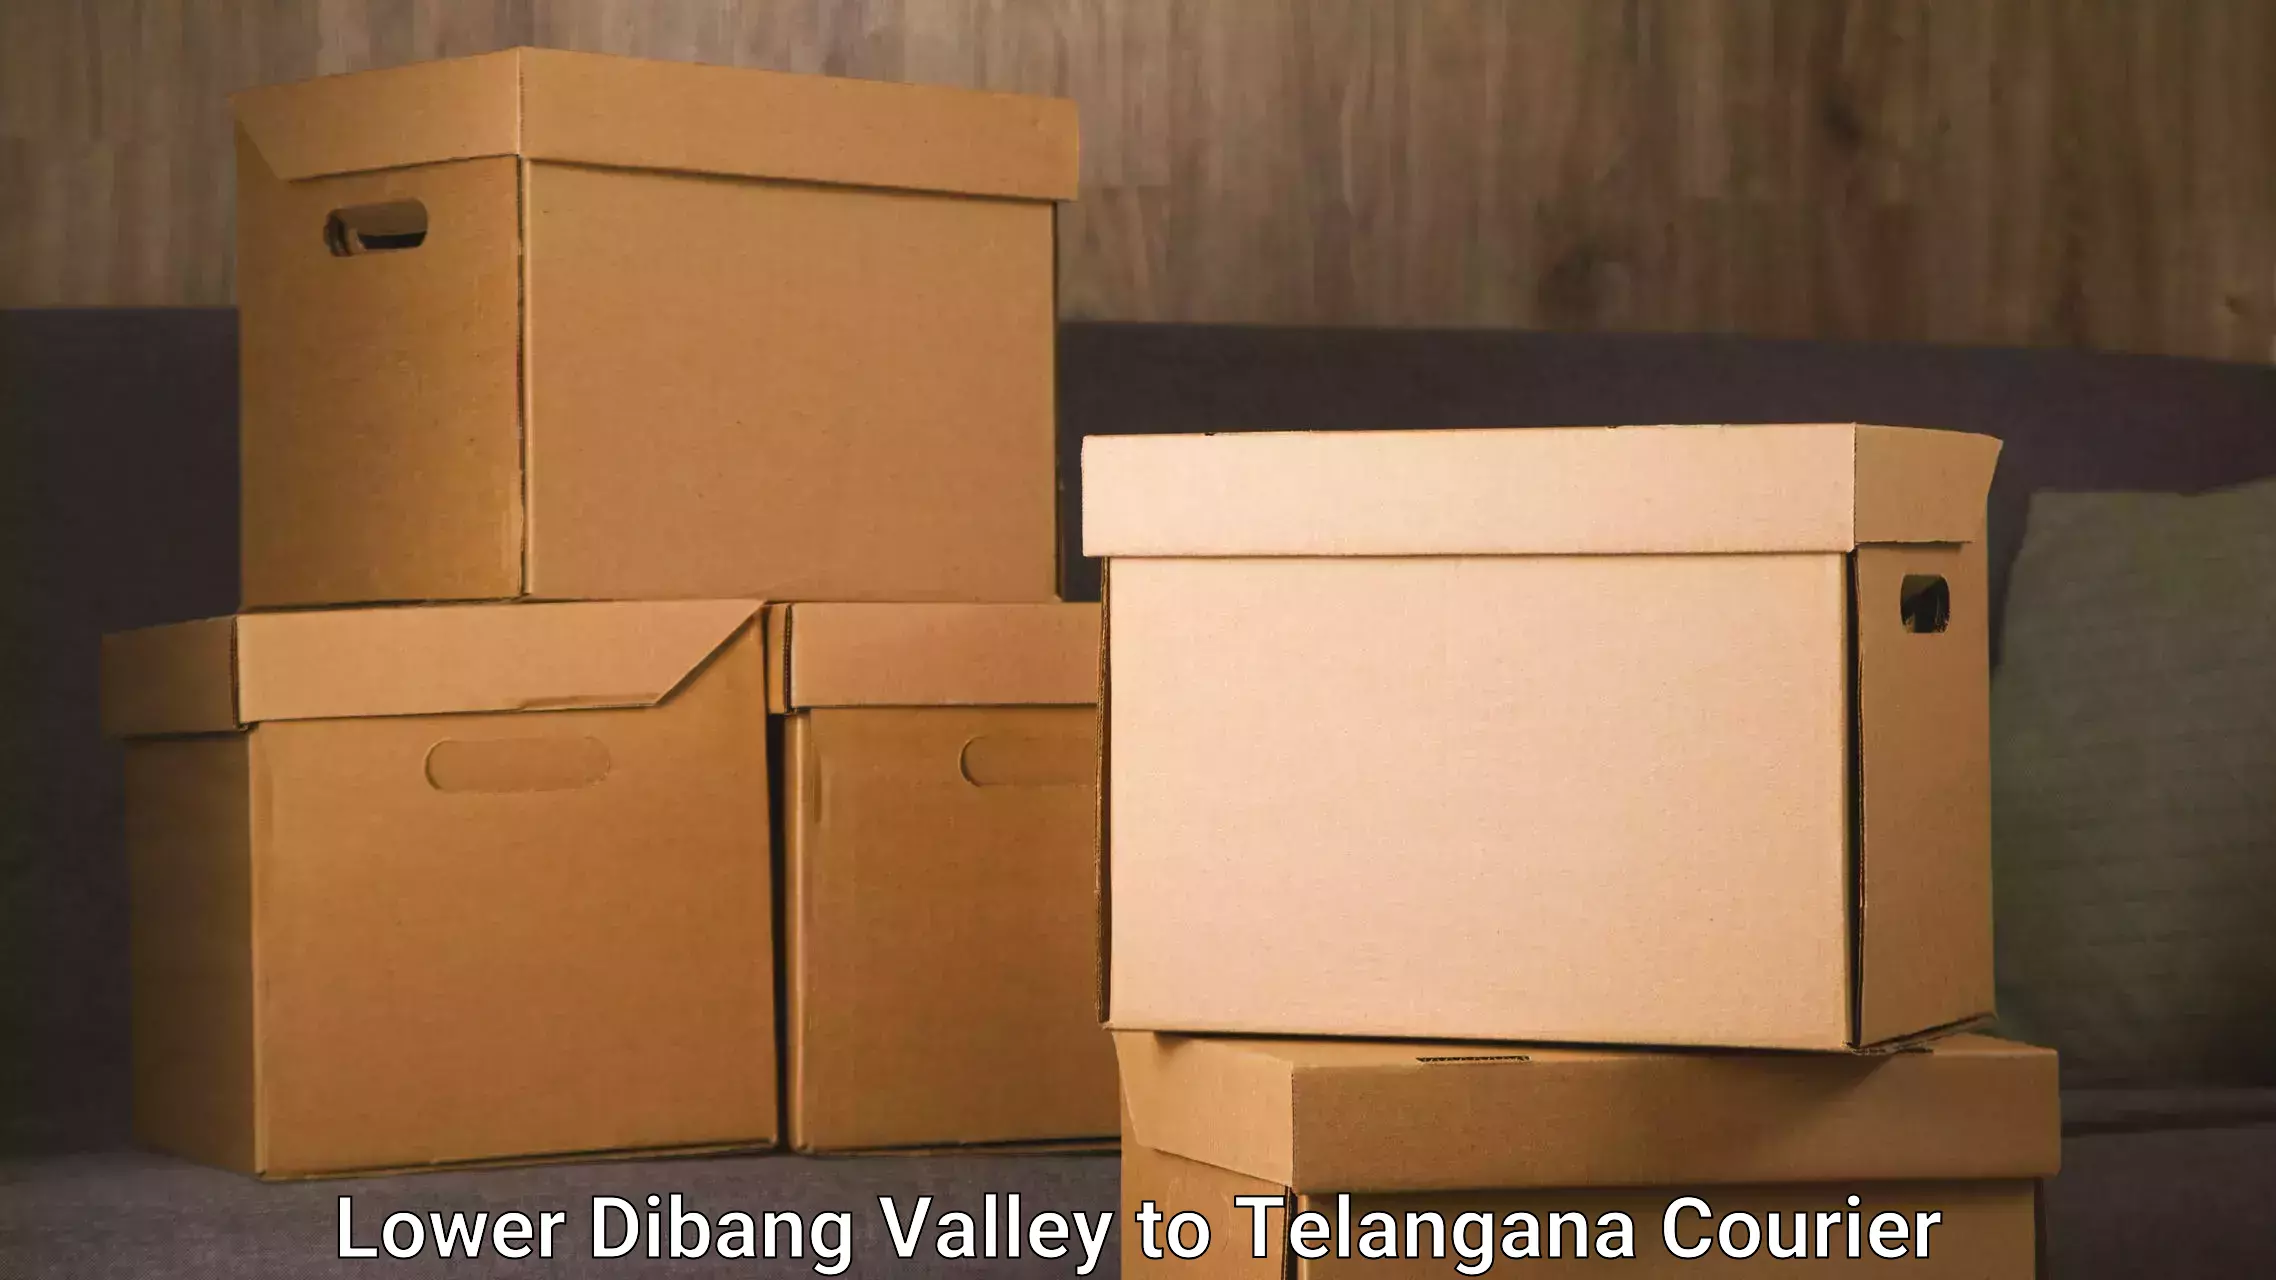 Digital courier platforms Lower Dibang Valley to Professor Jayashankar Telangana State Agricultural University Hyderabad